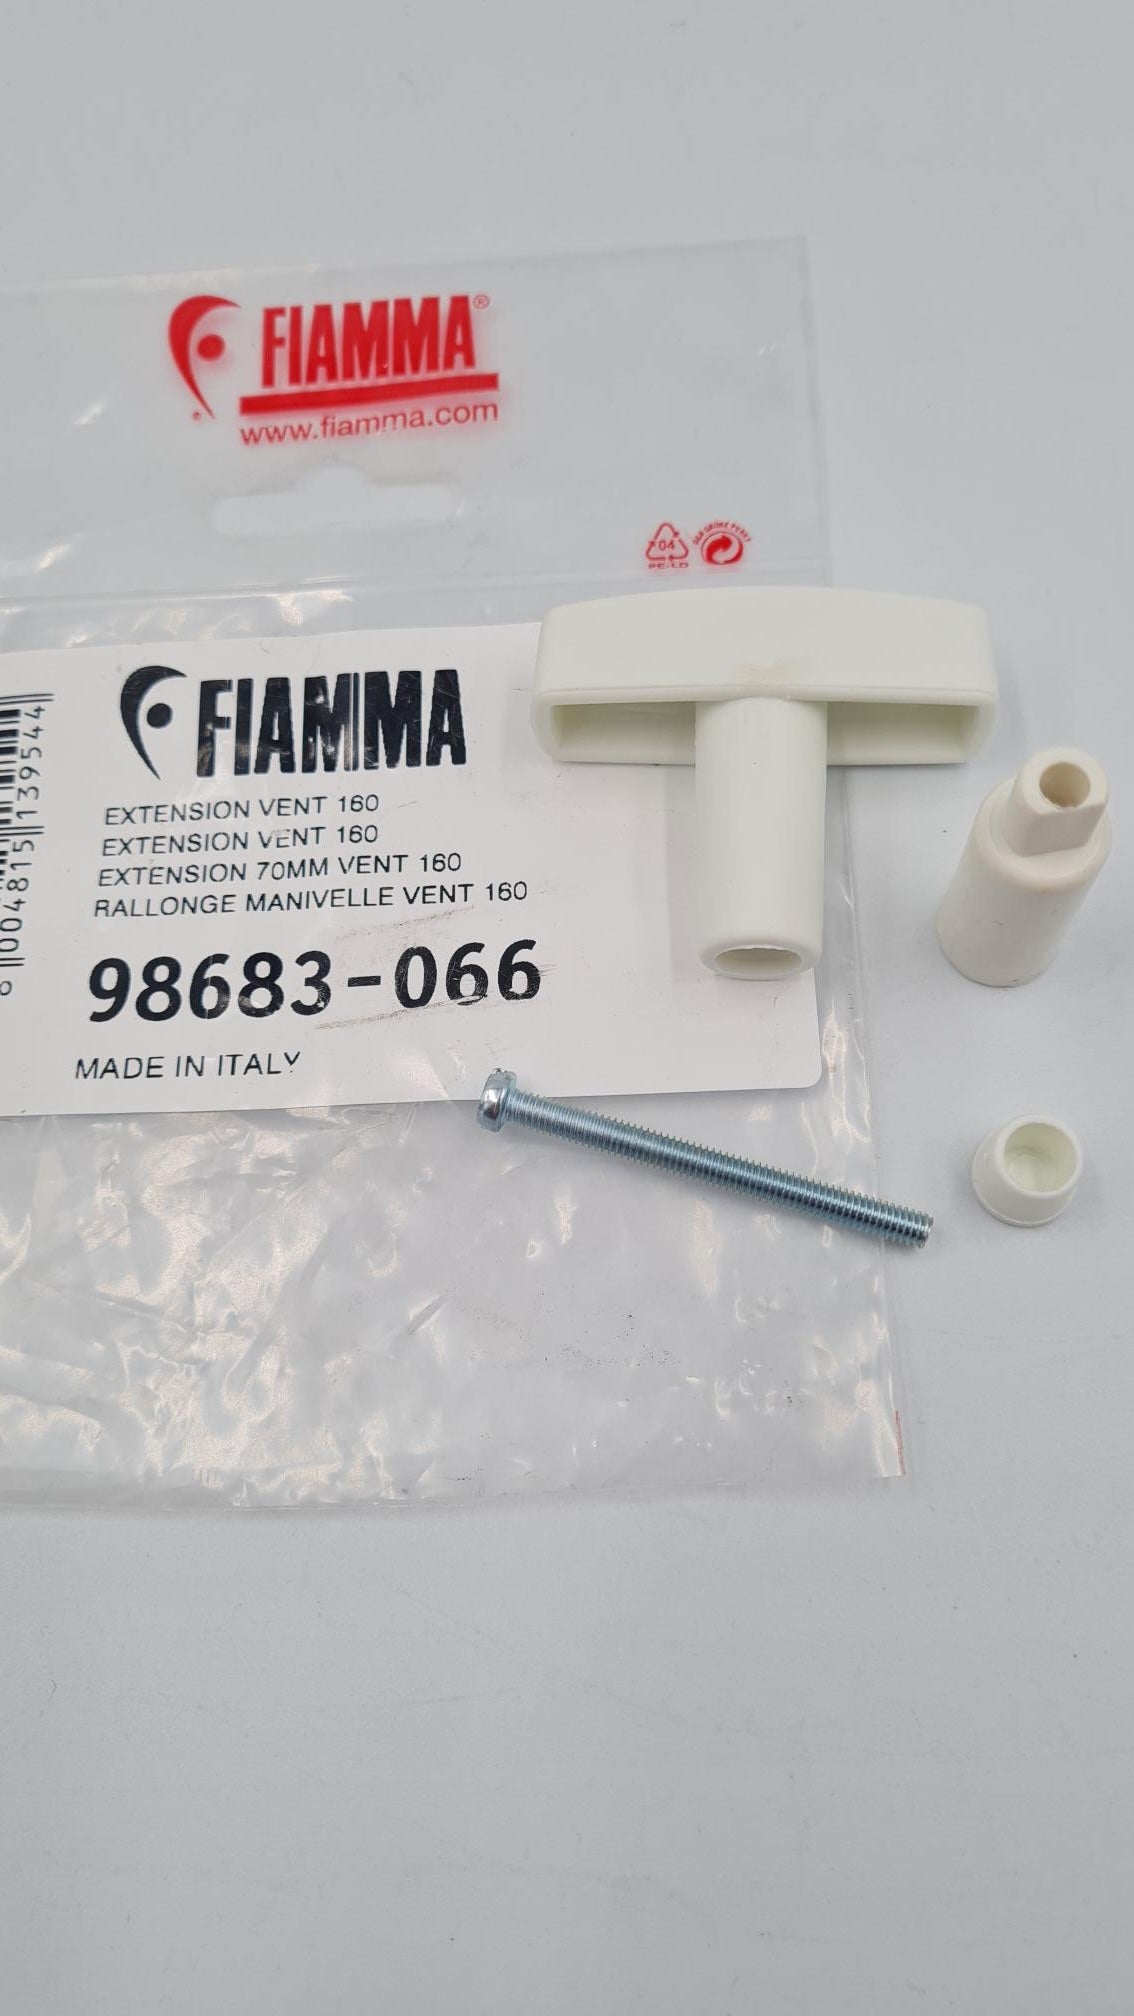 Fiamma Rooflight 160 Extension Opening Handle - 98683-066